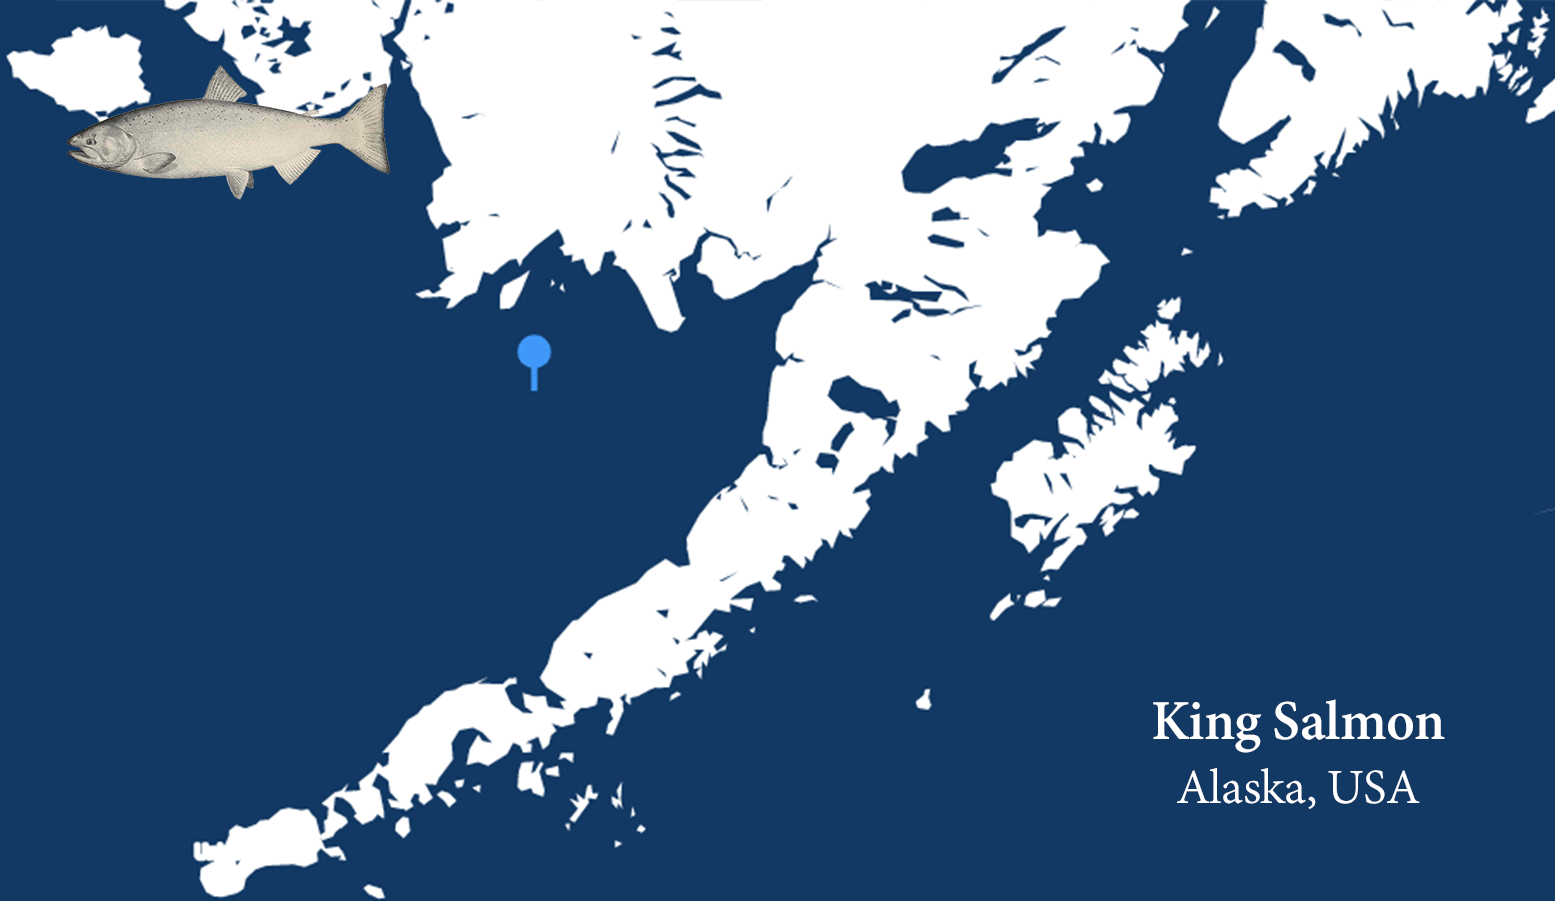 Wild Alaska King Salmon sourcing information